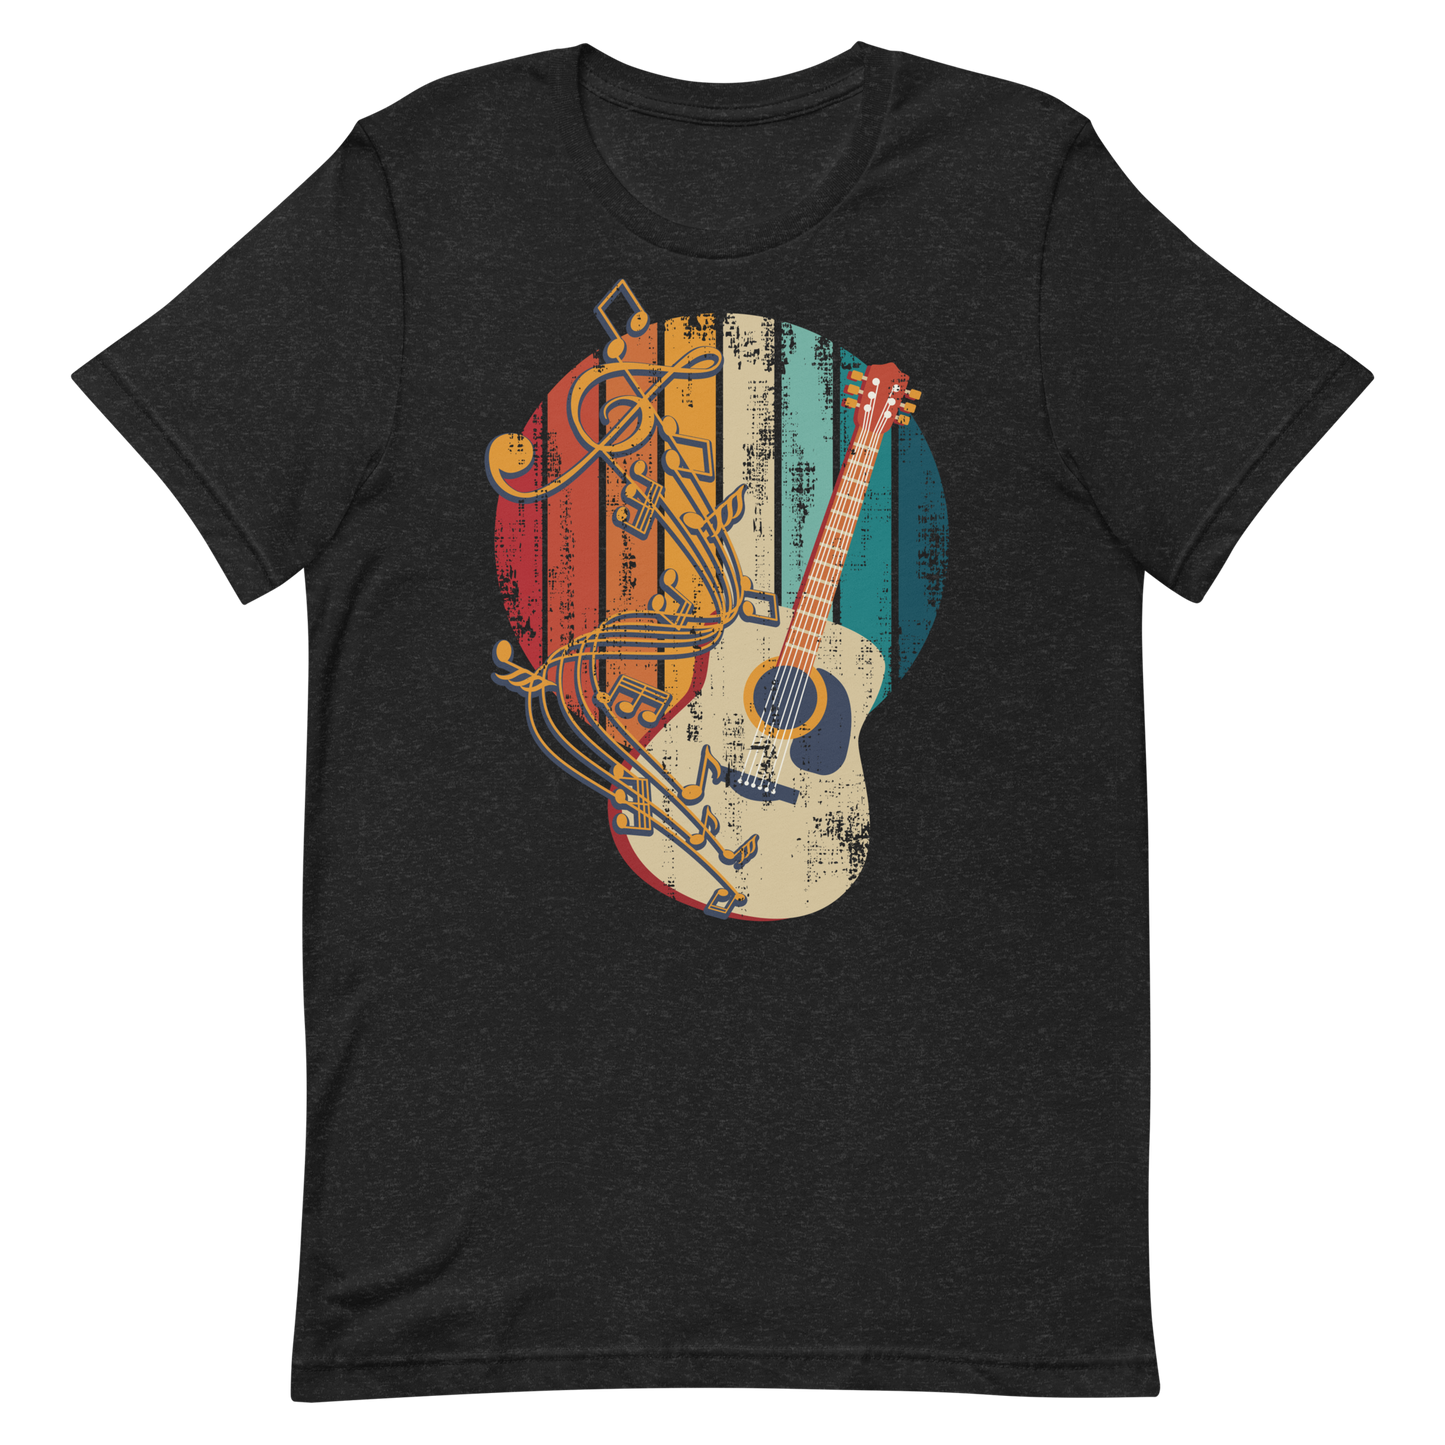 Retro Unisex T-Shirt - Classical Guitar and Notes Design Black Heather